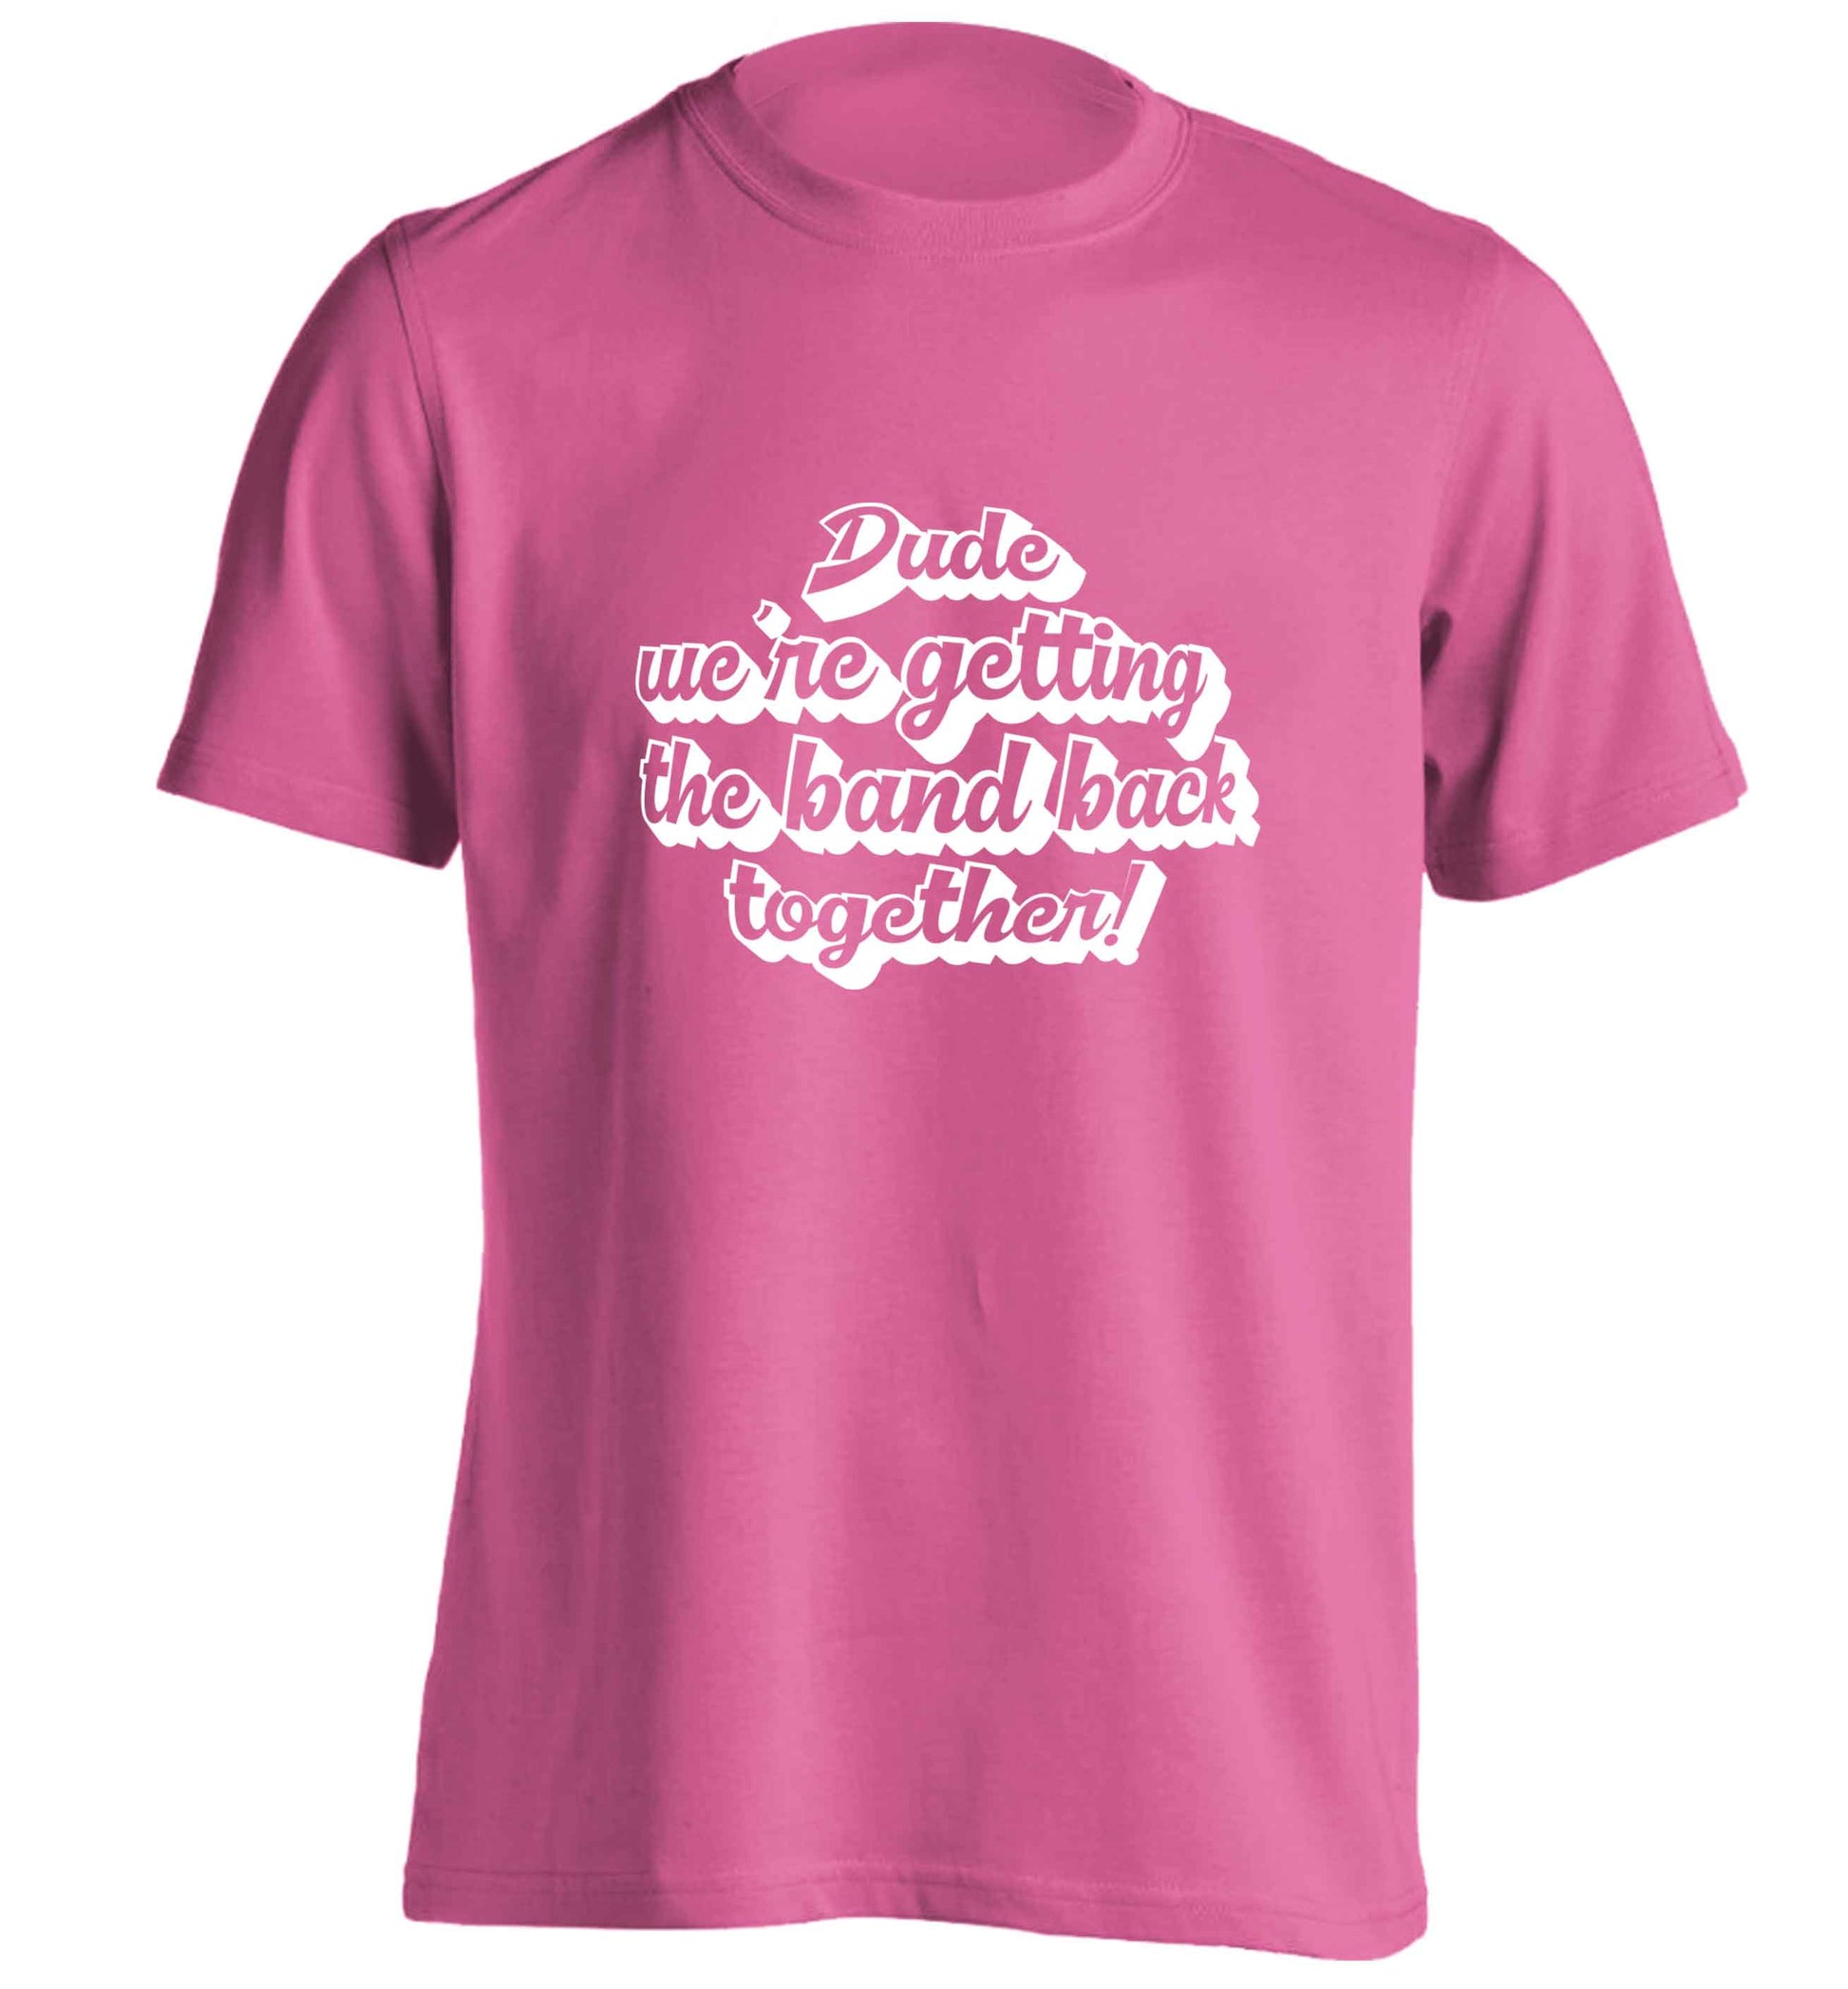 Gen Z funny viral meme  adults unisex pink Tshirt 2XL